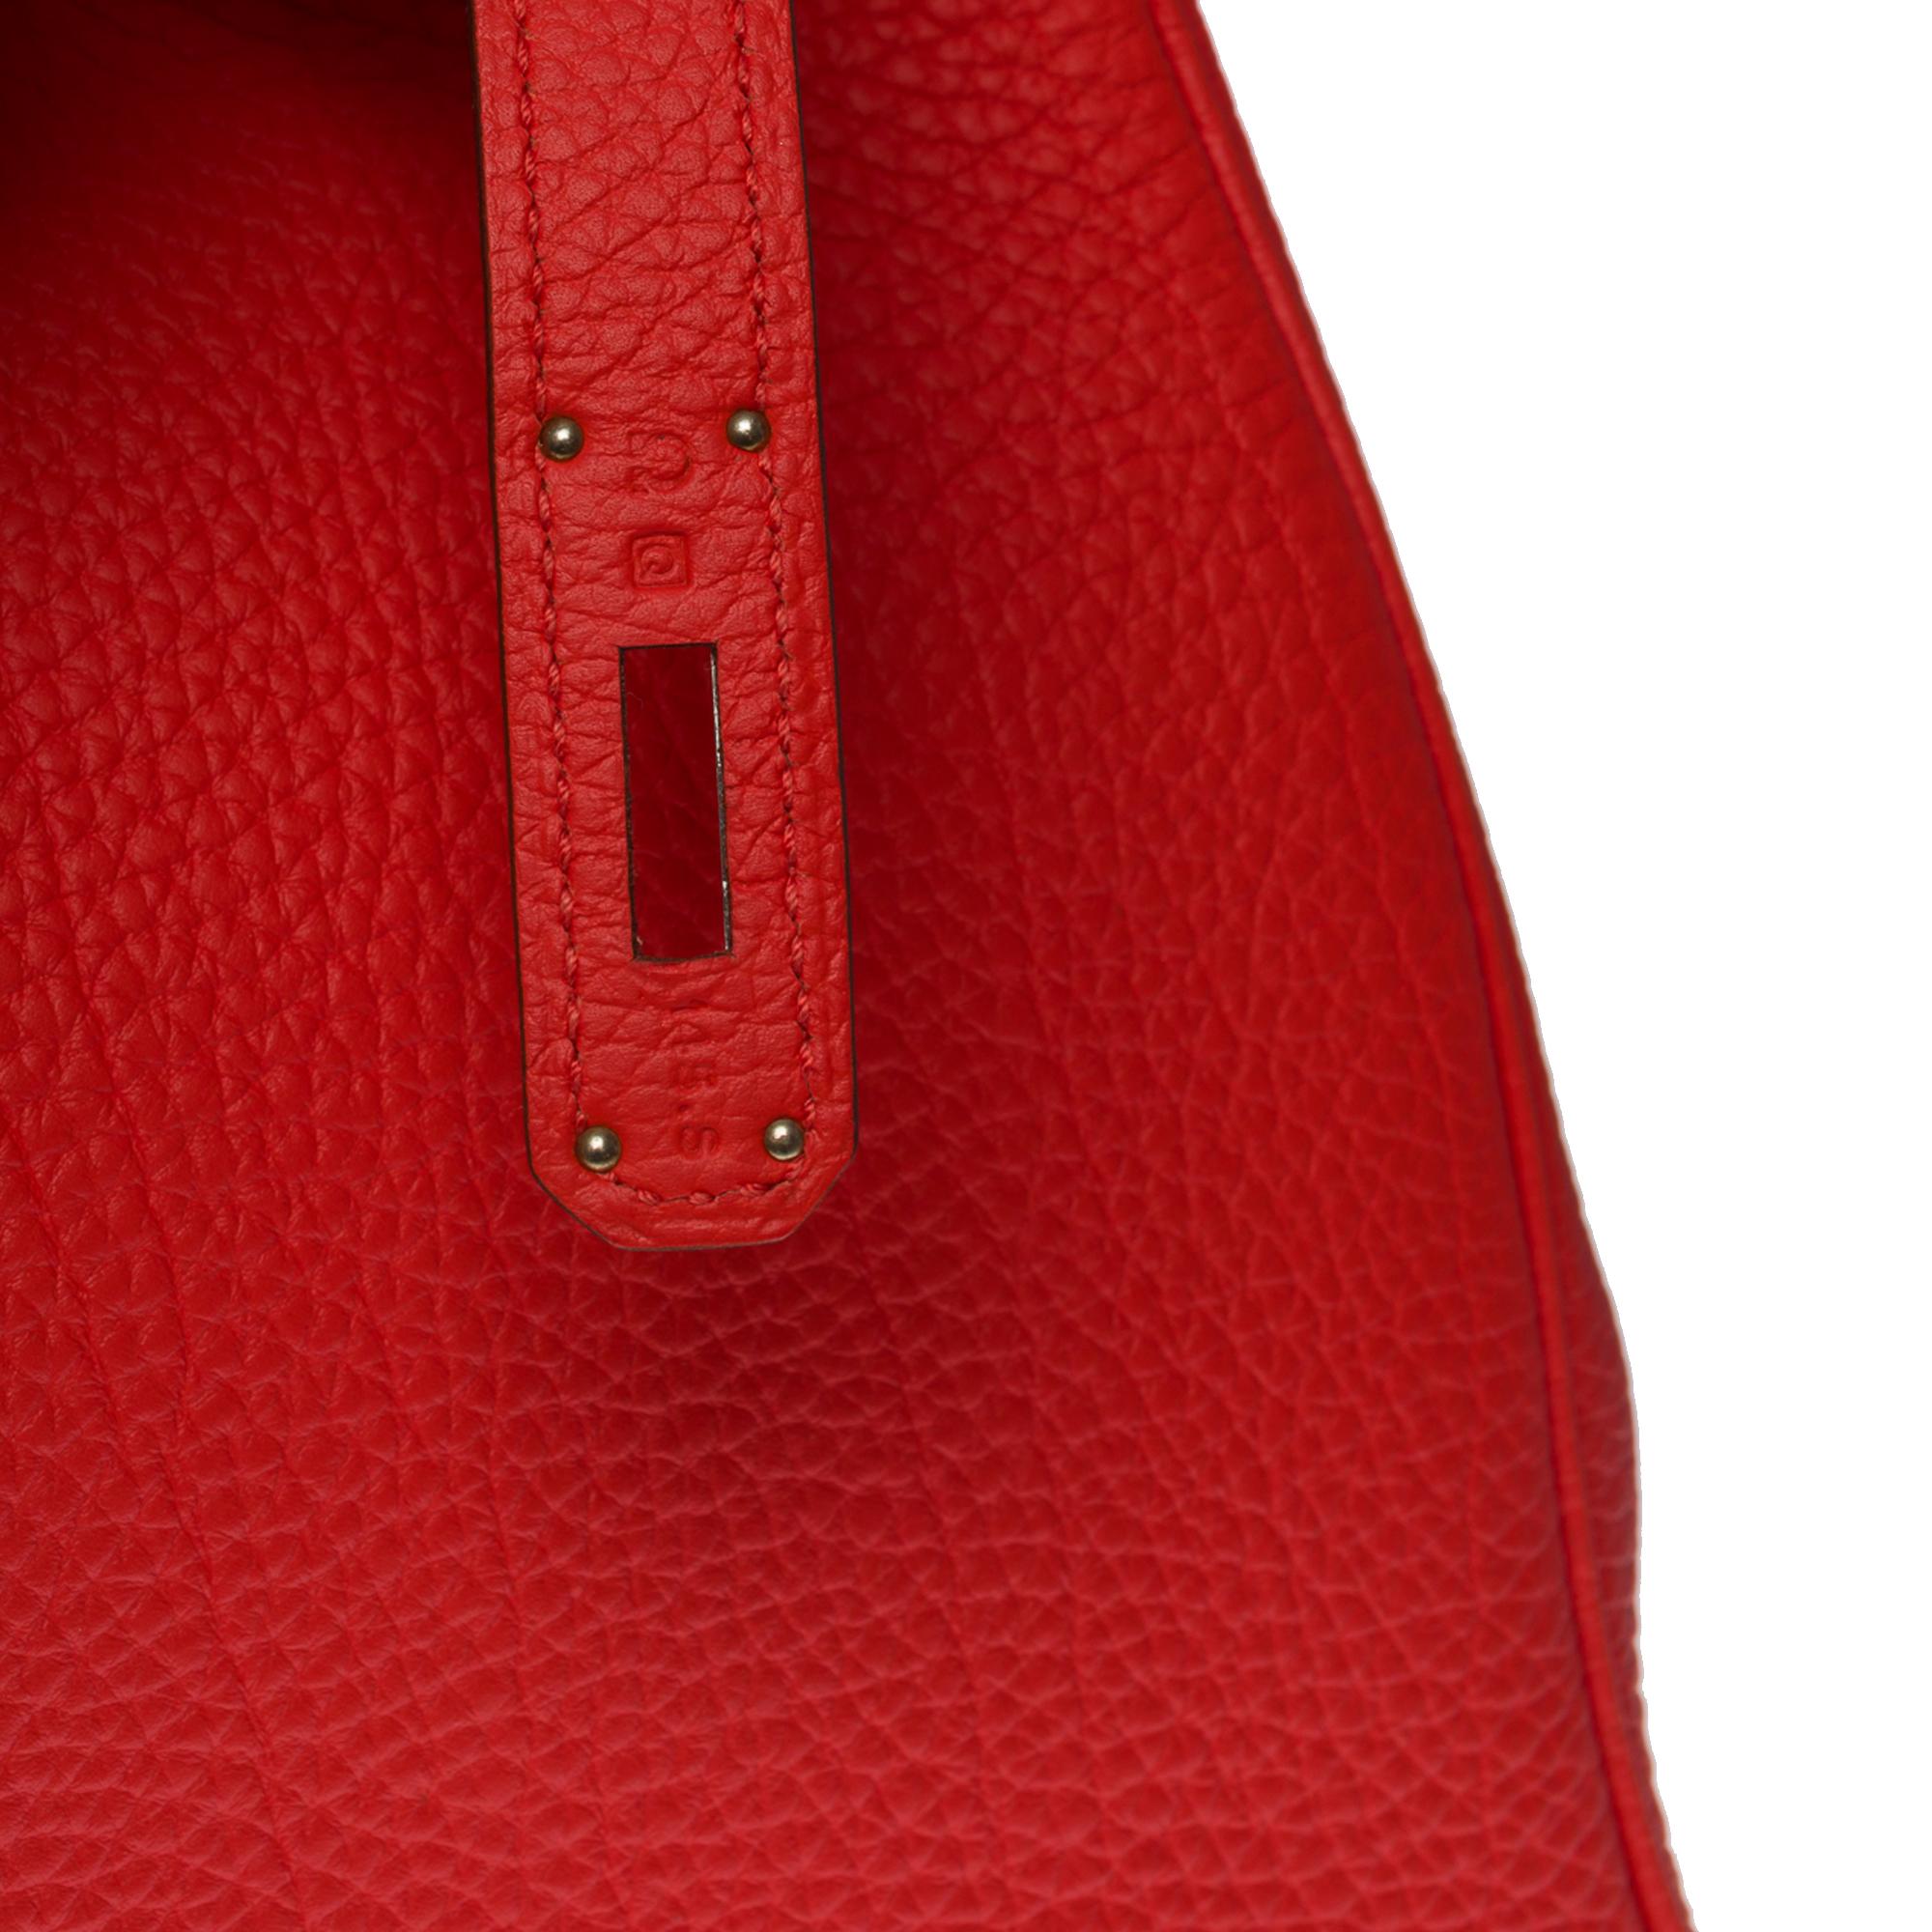 Almost New Hermès Birkin 35 handbag in Orange Poppy Togo leather, SHW For Sale 2